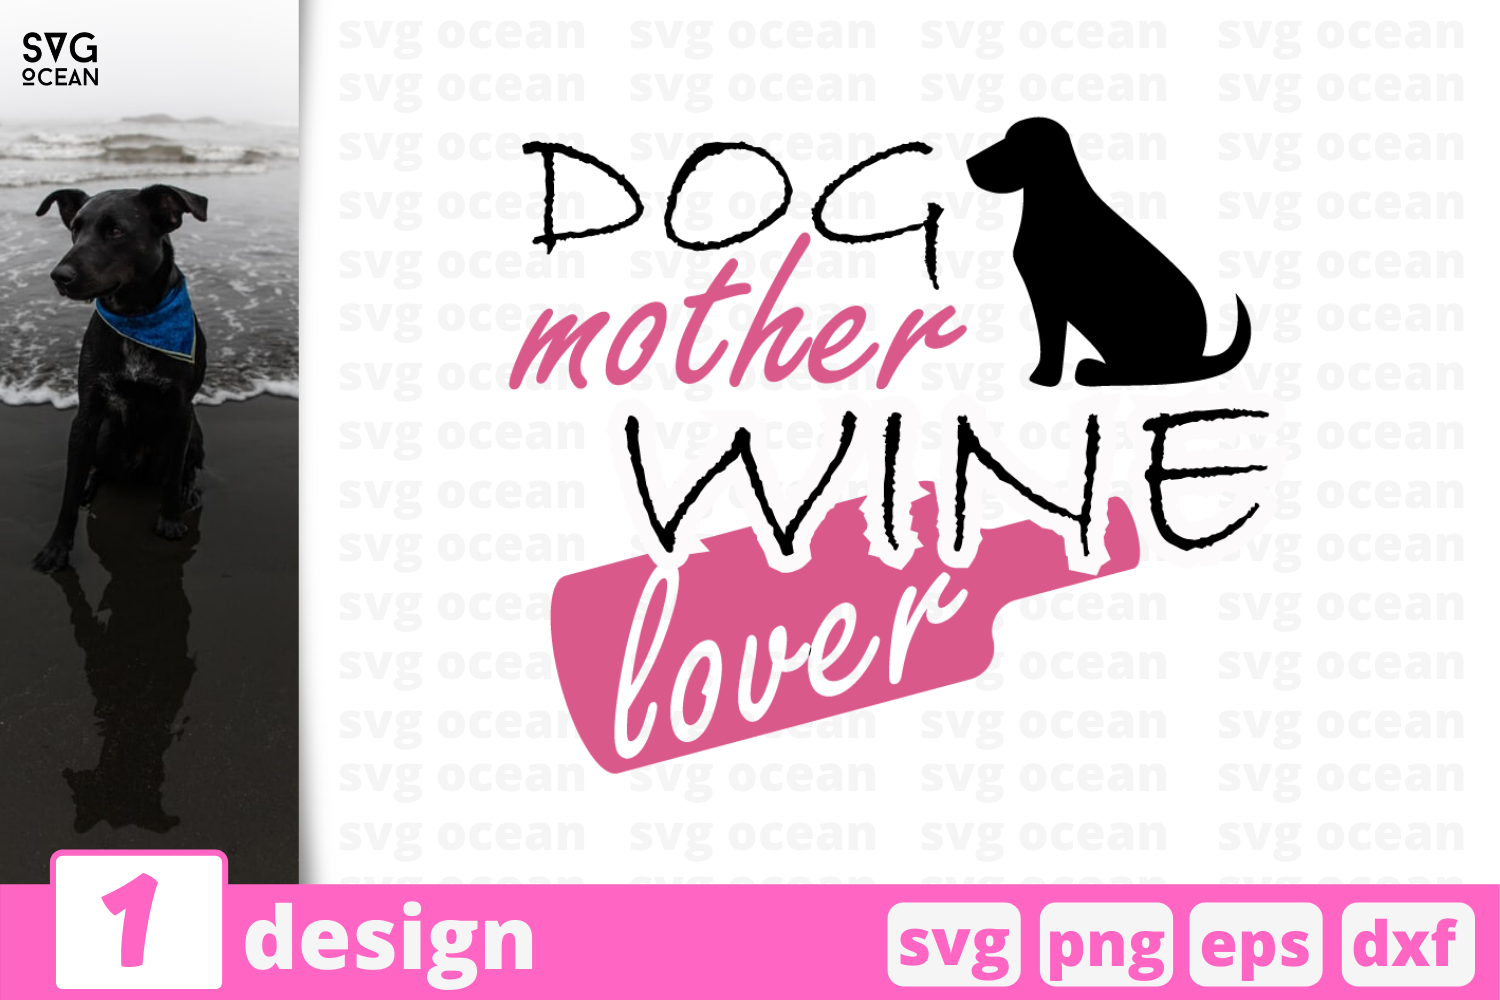 Dog svg easily distracted by dogs diy printable iron on dog PDF boy girl puppy svg dxf cut file animal lover dog kid pet cricut diy shirt